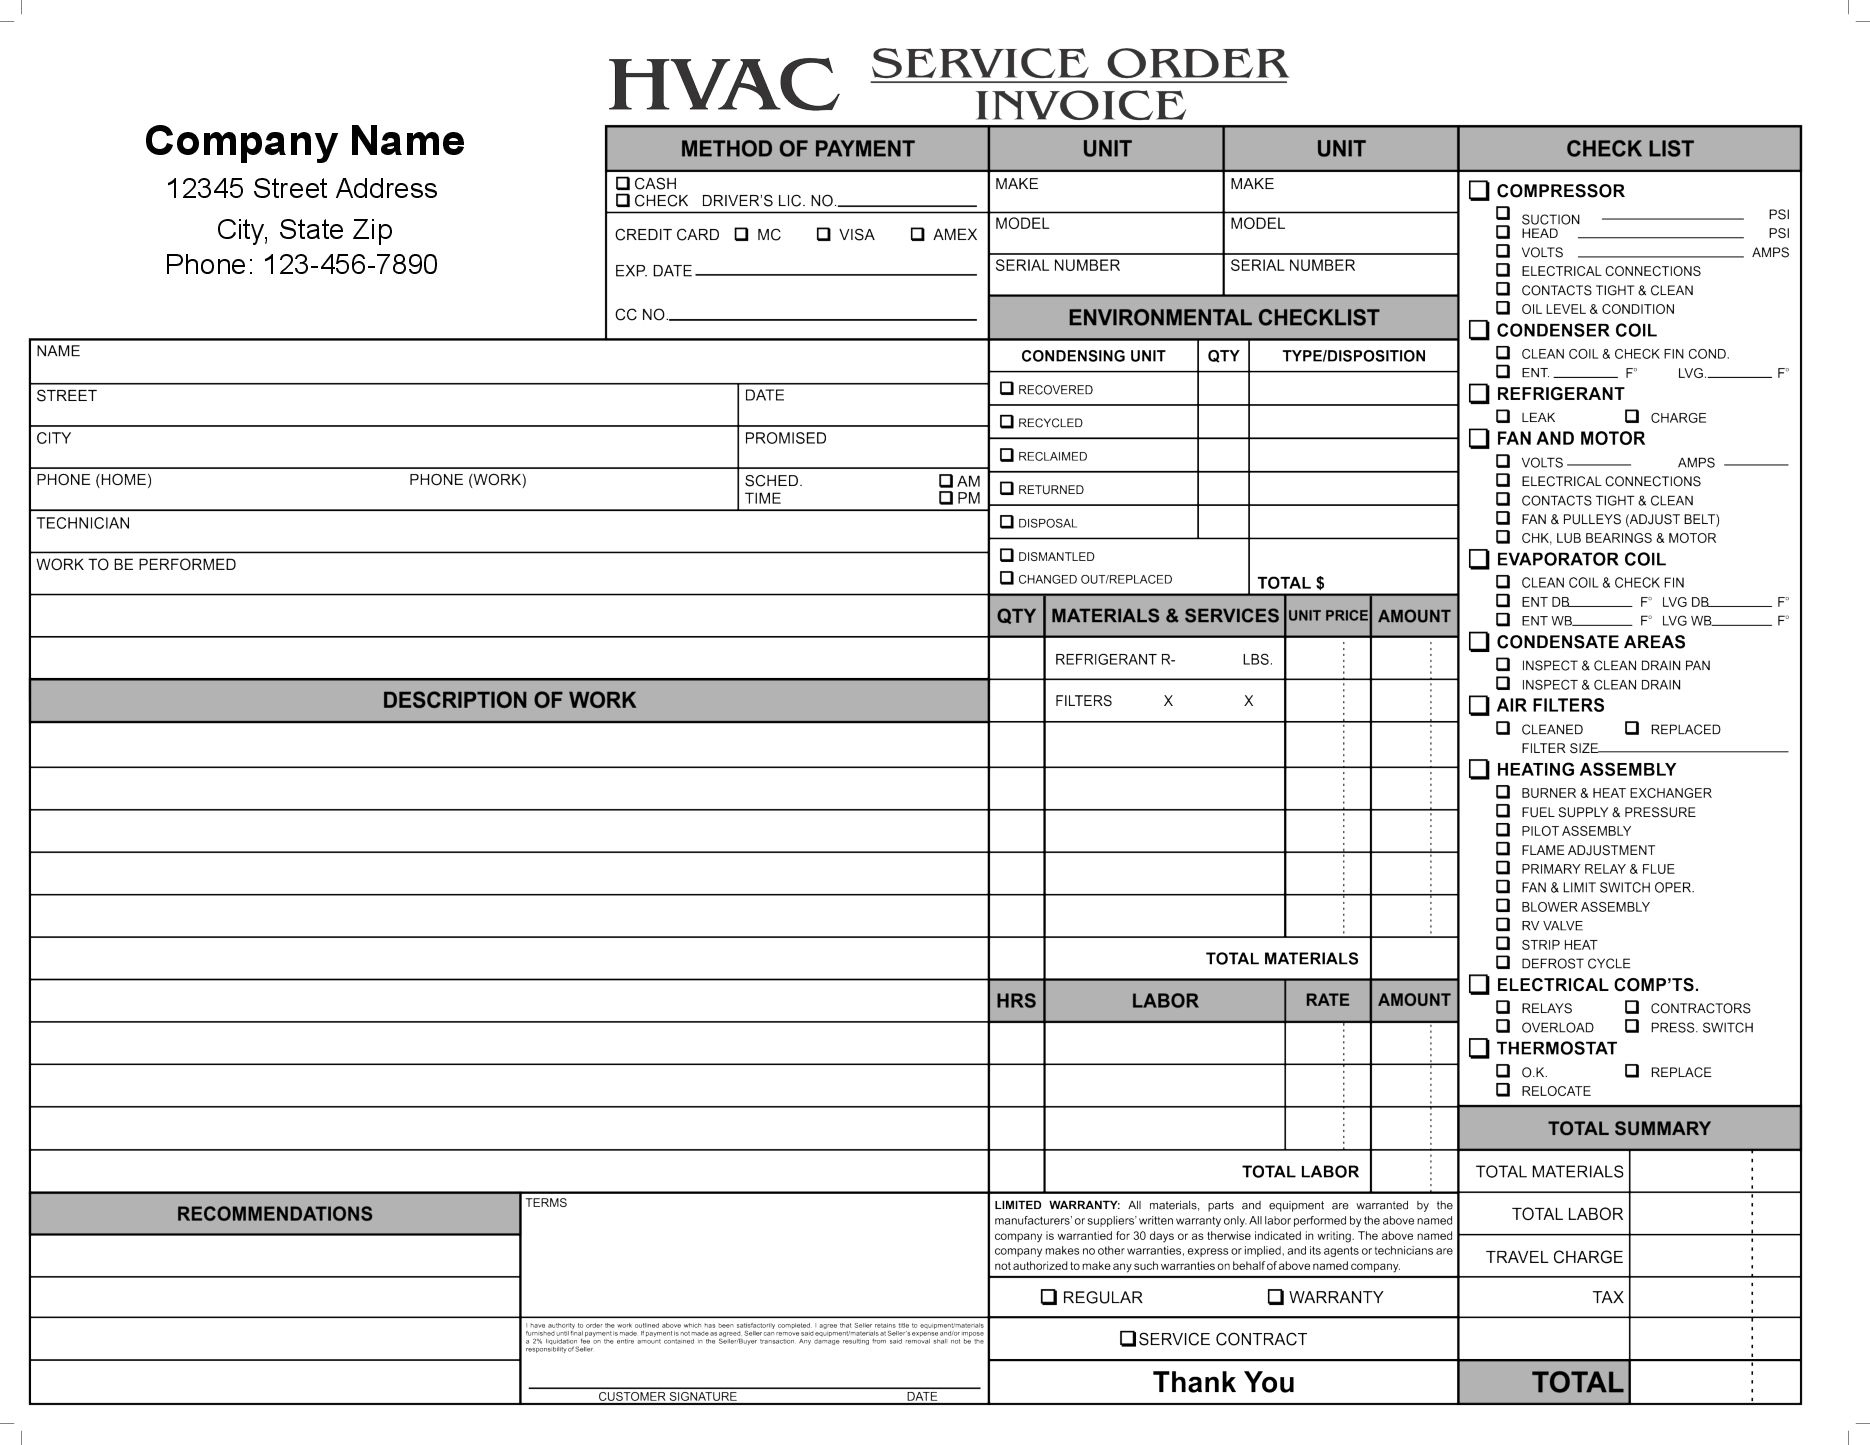 11 Hvac Invoice Template Free Top Invoice Templates Hvac with Hvac Service Invoice Template Free